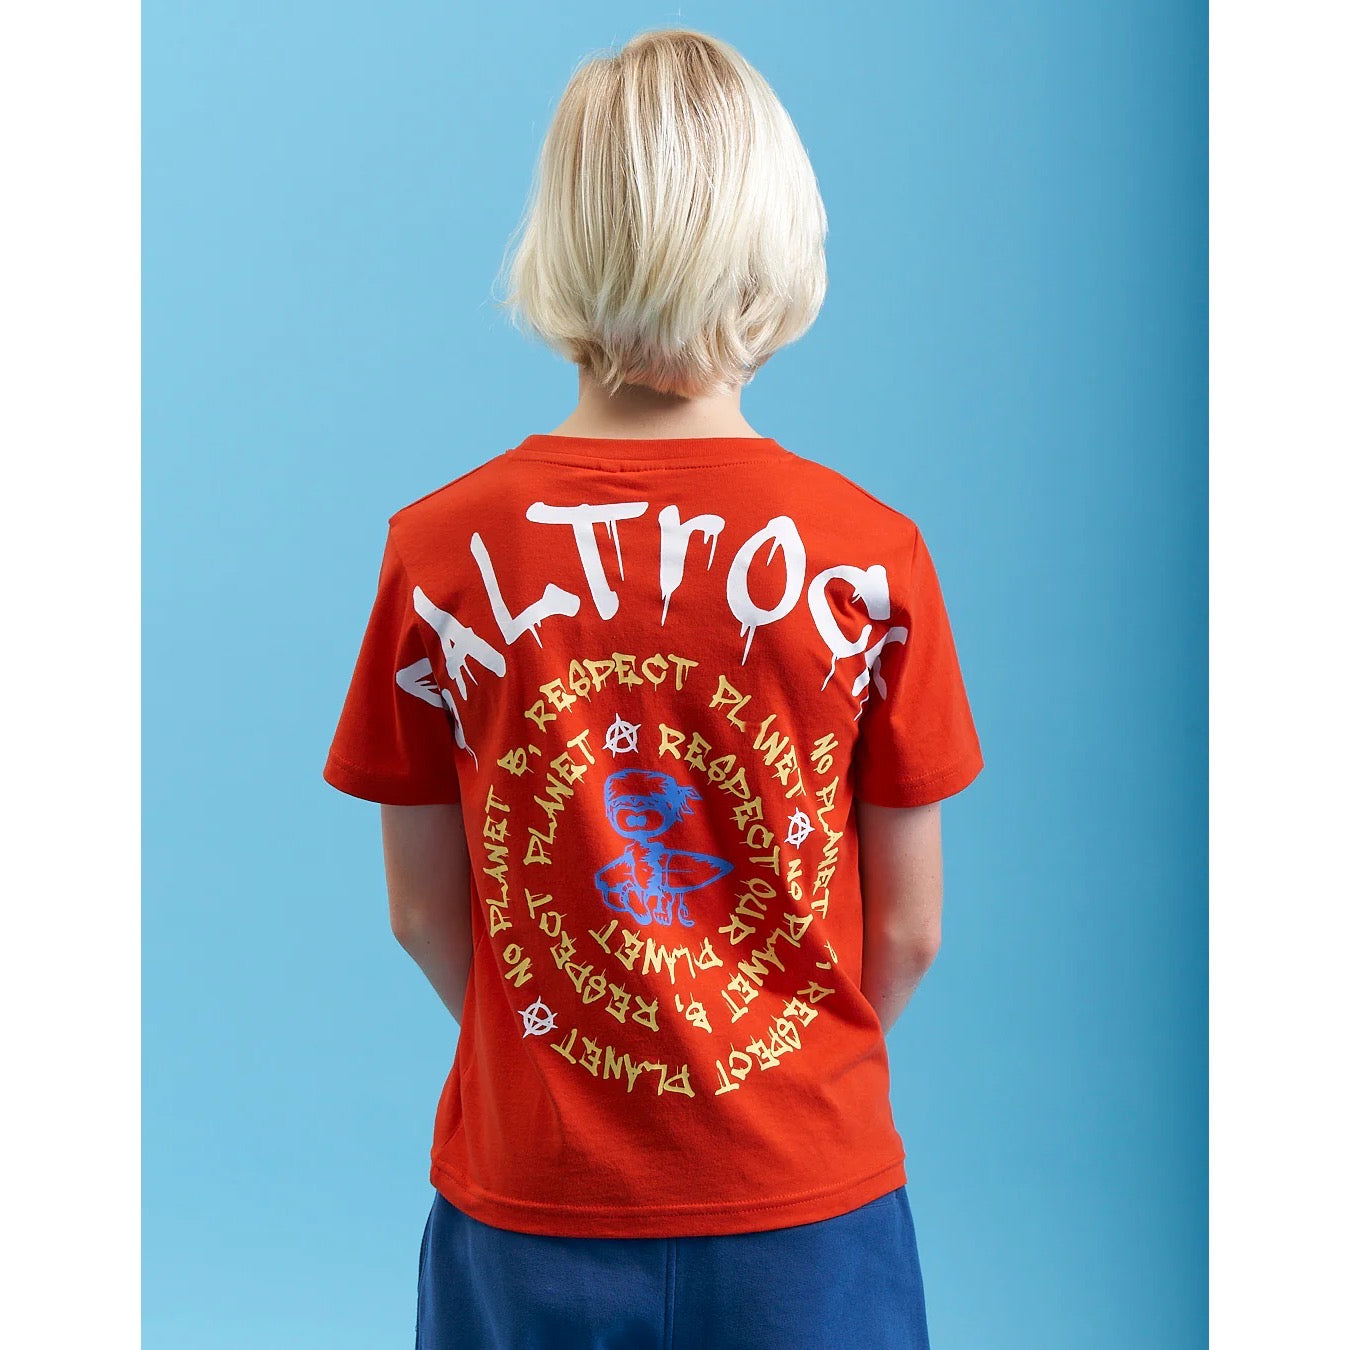 Saltrock Activist T-Shirt Clothing 7/8YRS / Red,9/10YRS / Red,11/12YRS / Red,13YRS / Red